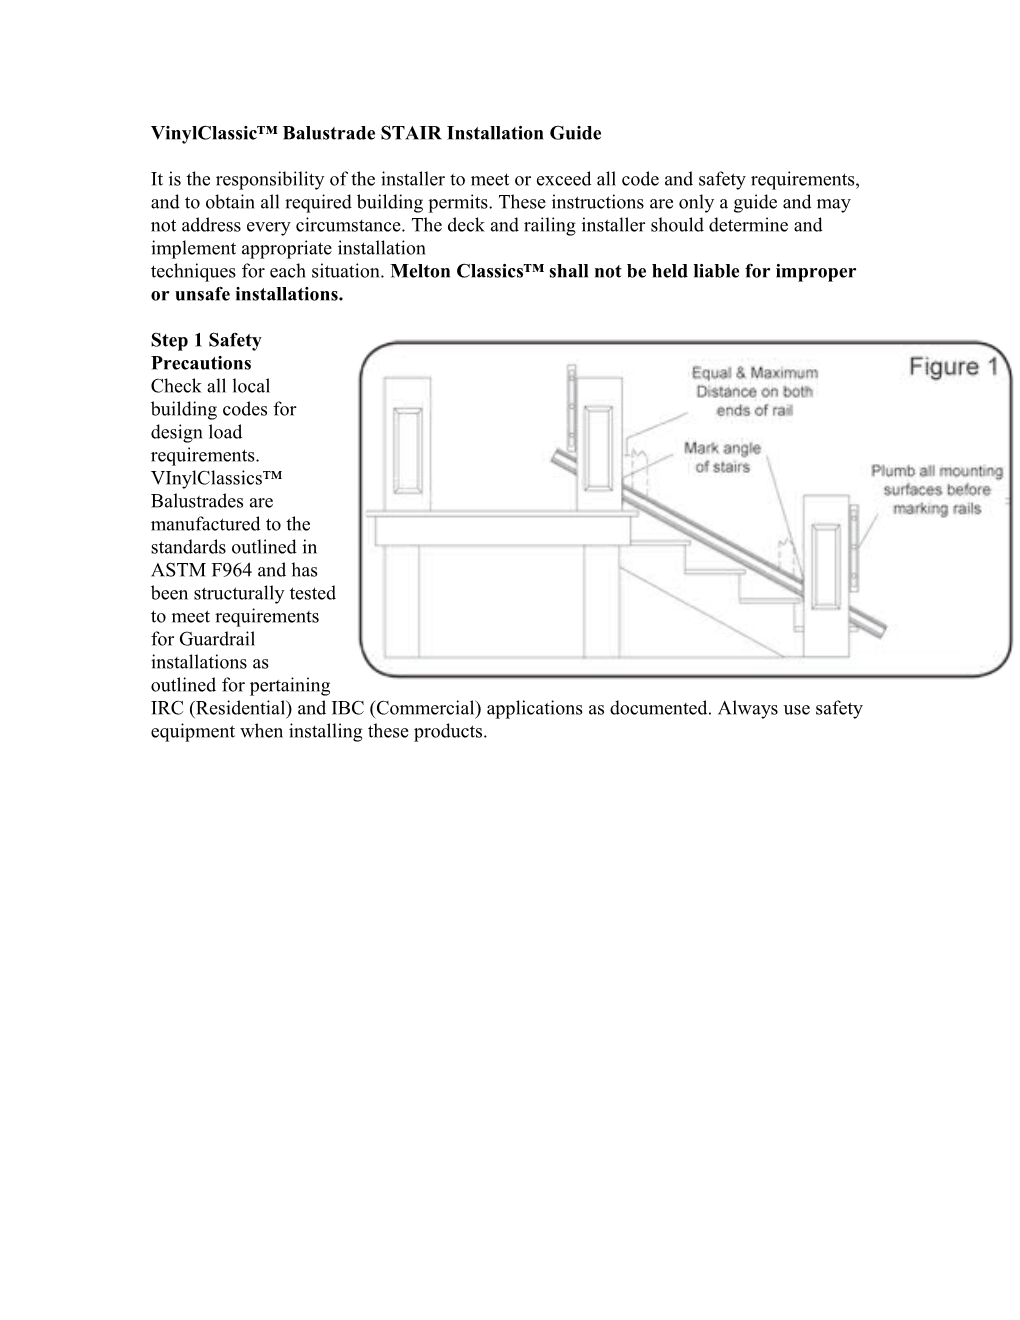 Vinylclassic Balustrade STAIR Installation Guide